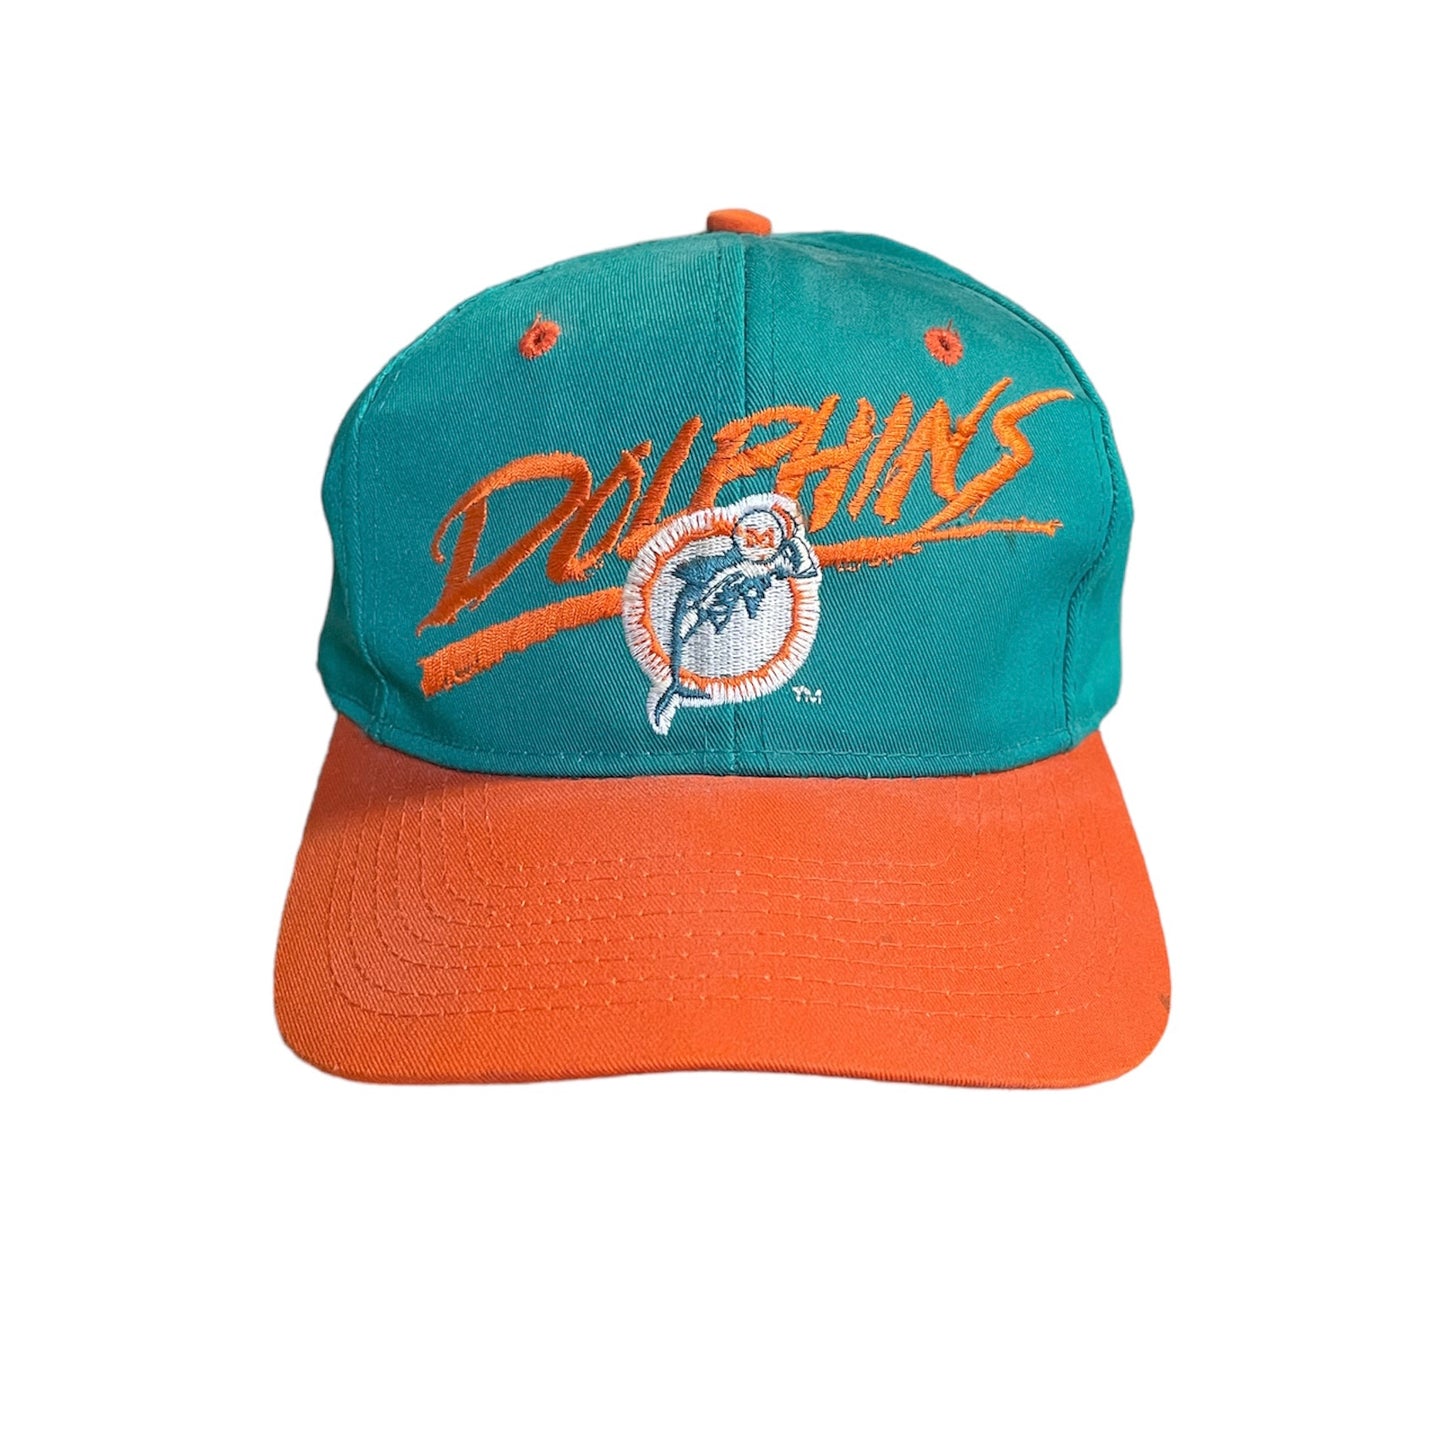 Vintage Miami Dolphins Snapback Hat